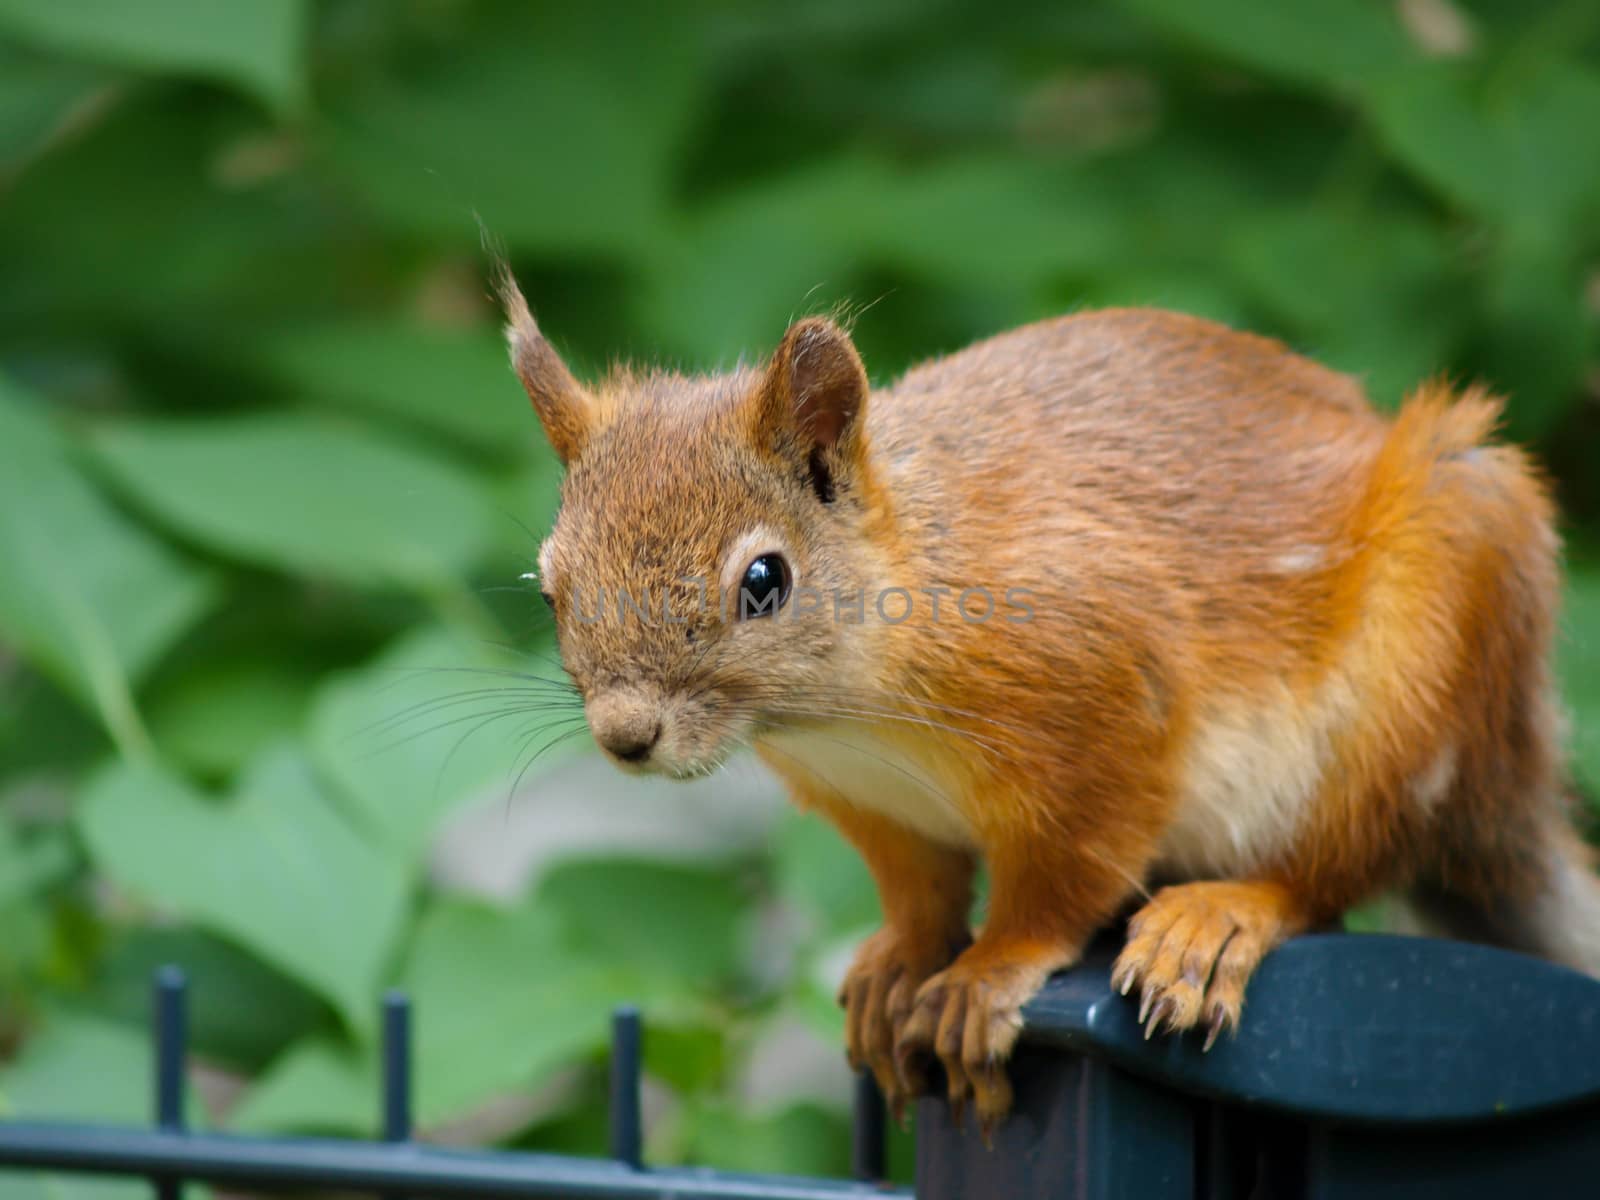 Squirrel on a fence by Arvebettum